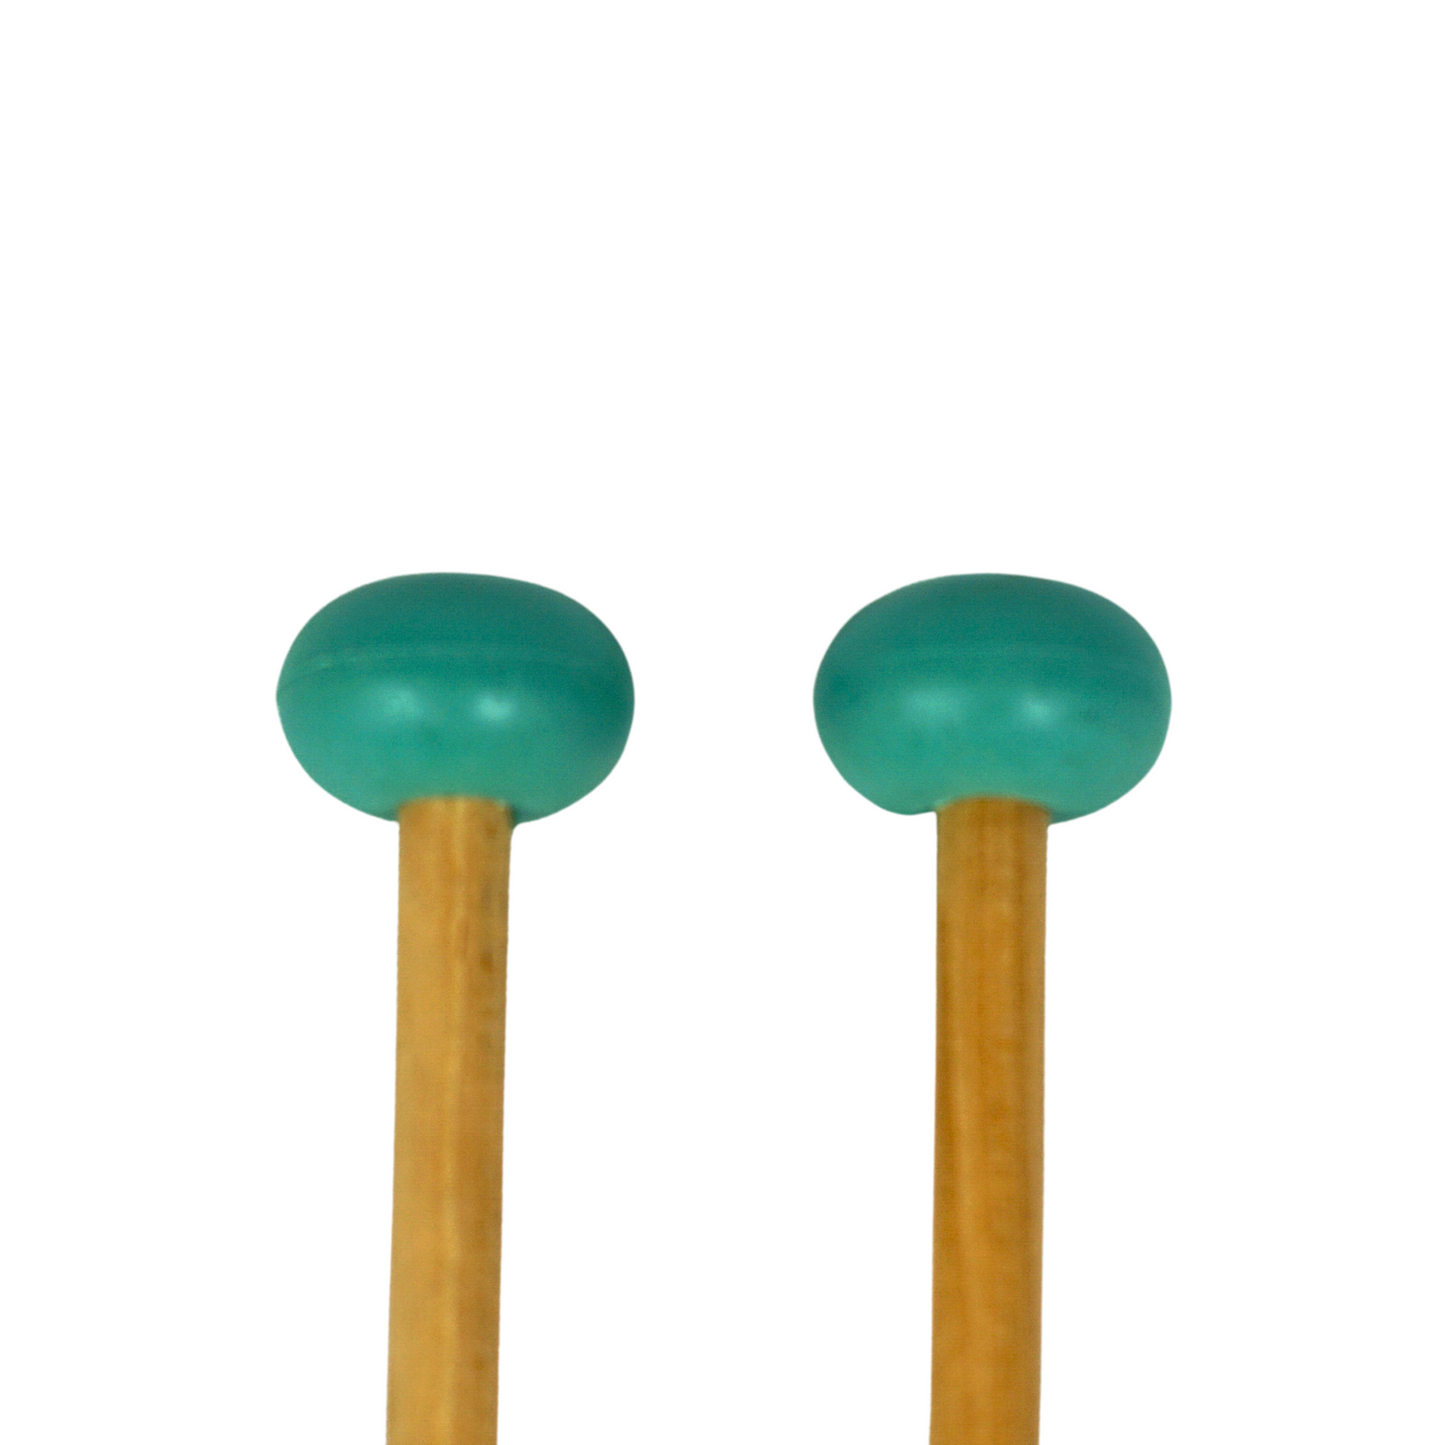 Xylophone/Bell Mallets, Medium, Green pair - MAL-XM14-GN